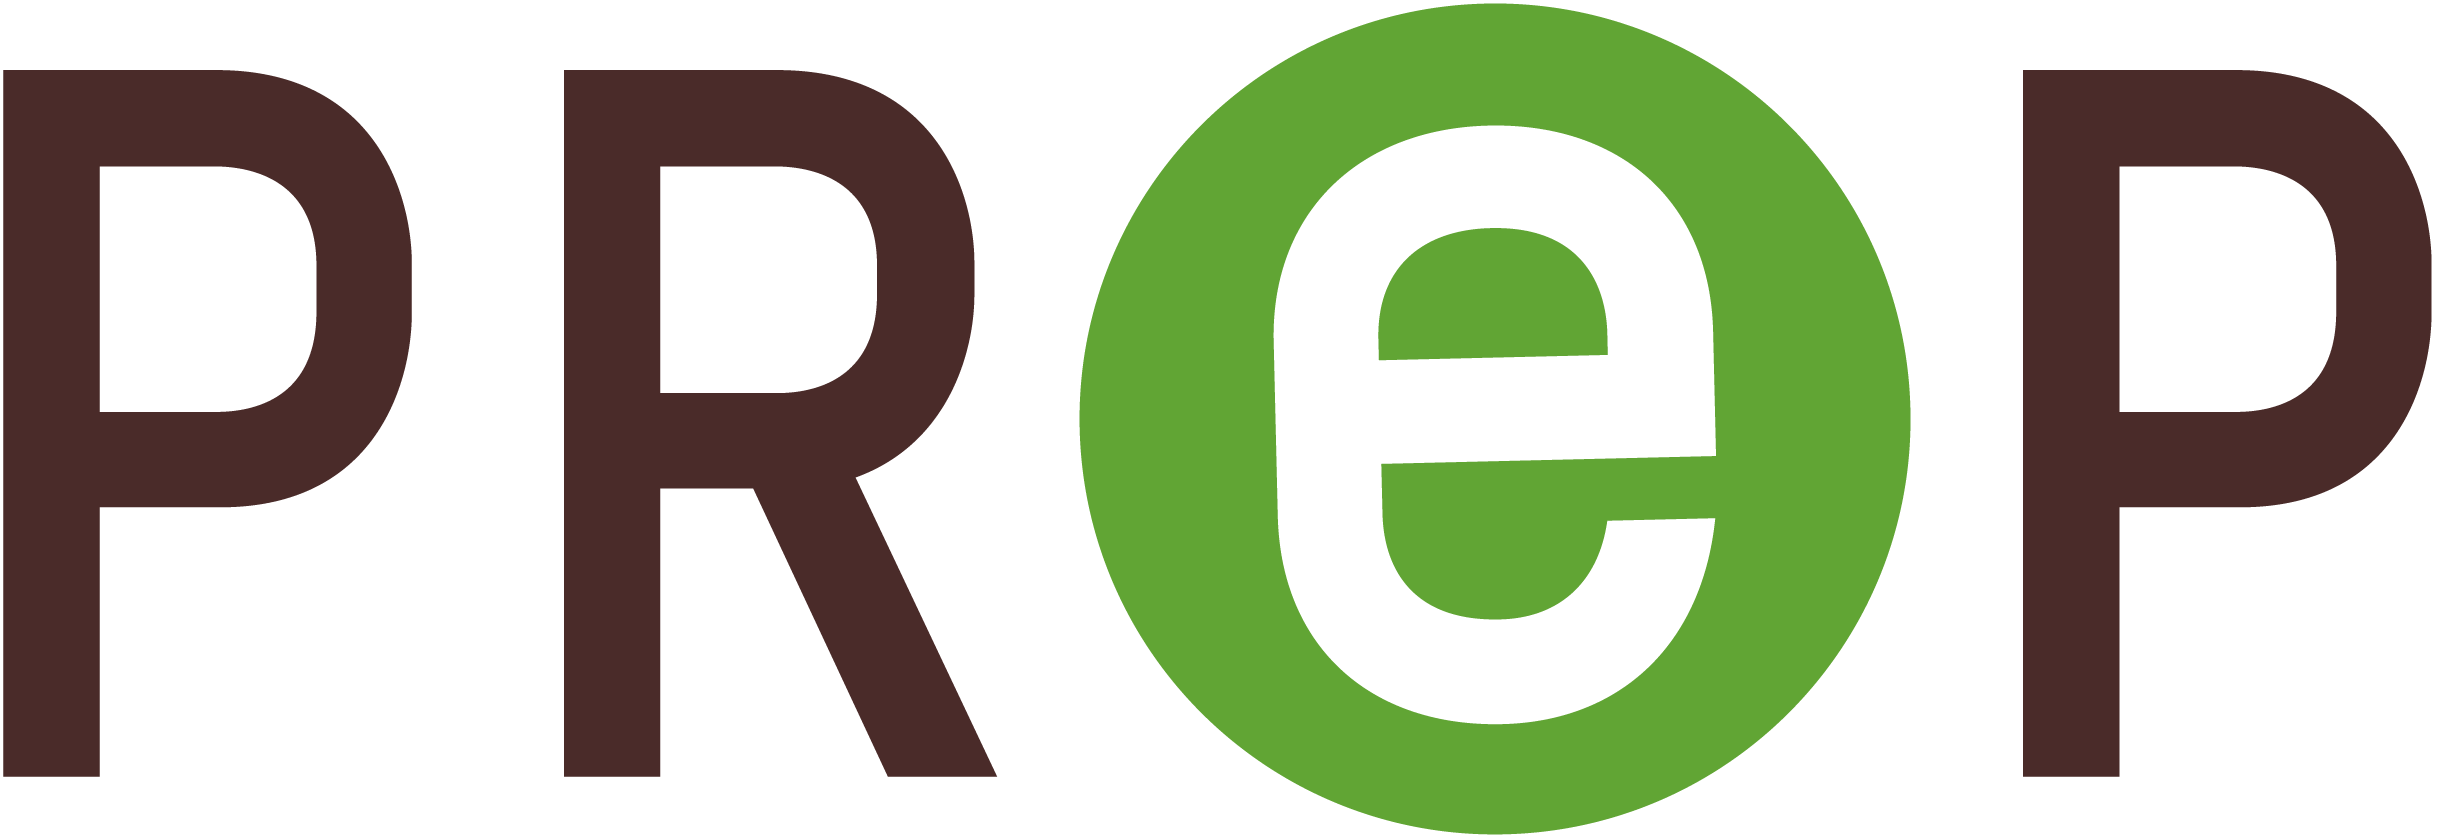 prep-logo-rgb-notag-oxfam-america-1109083.png (2440×836)